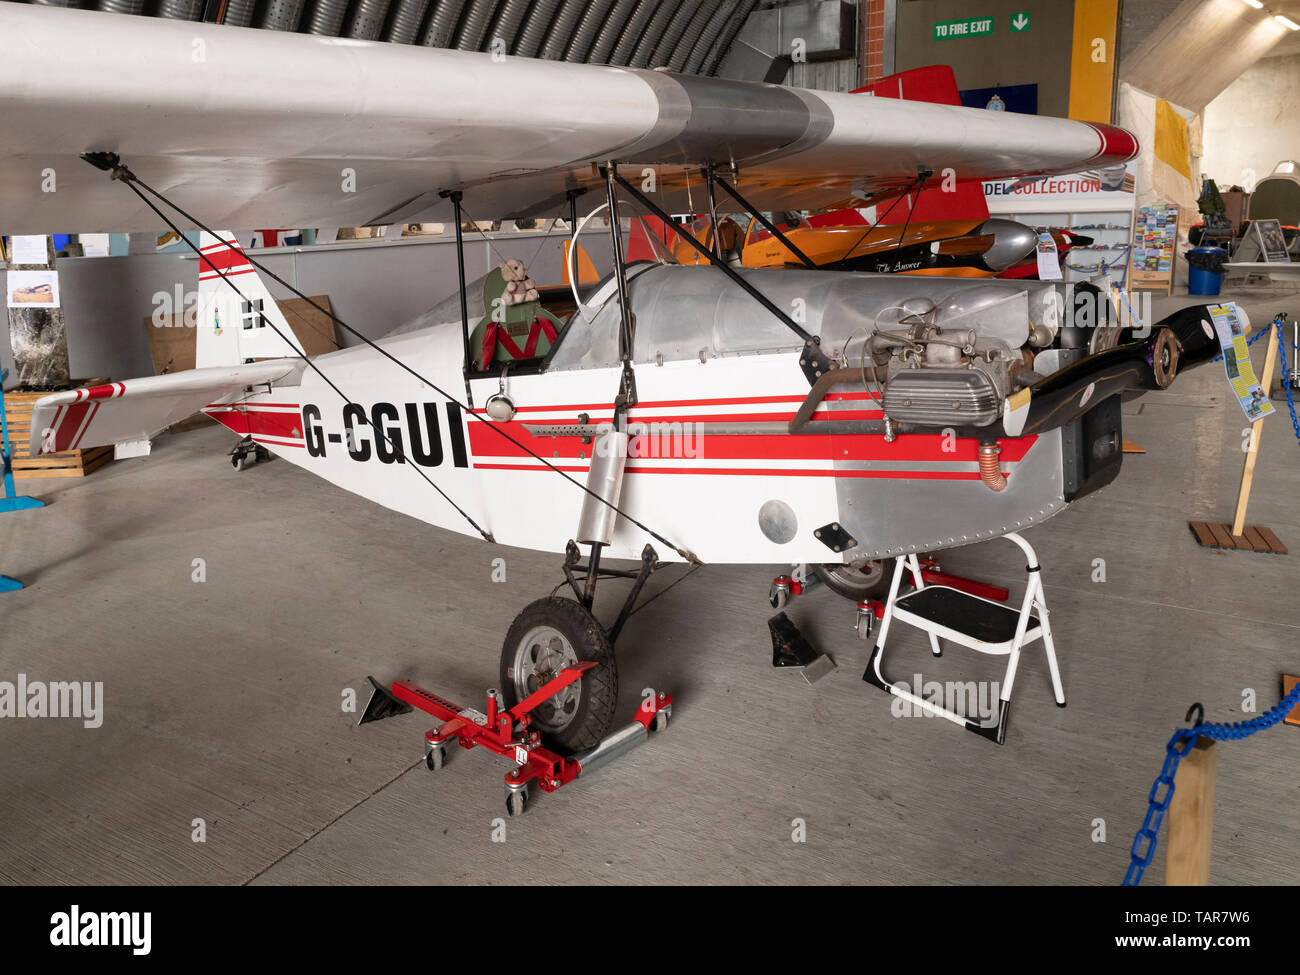 Hangar Exhibit, G-CGUI Stock Photo